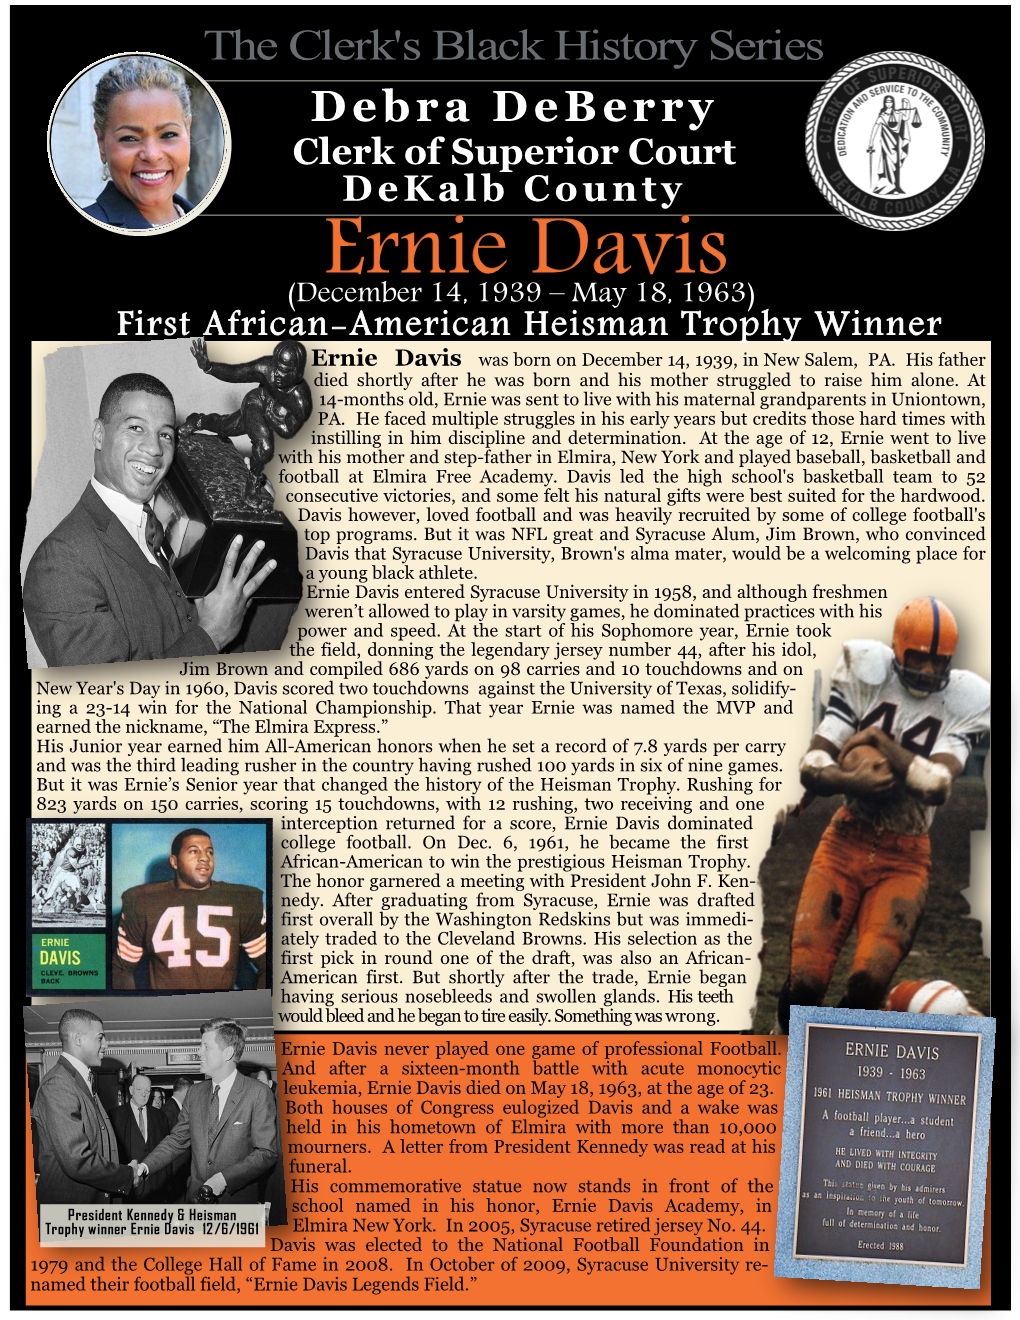 Ernie Davis Was Born on December 14, 1939, in New Salem, PA